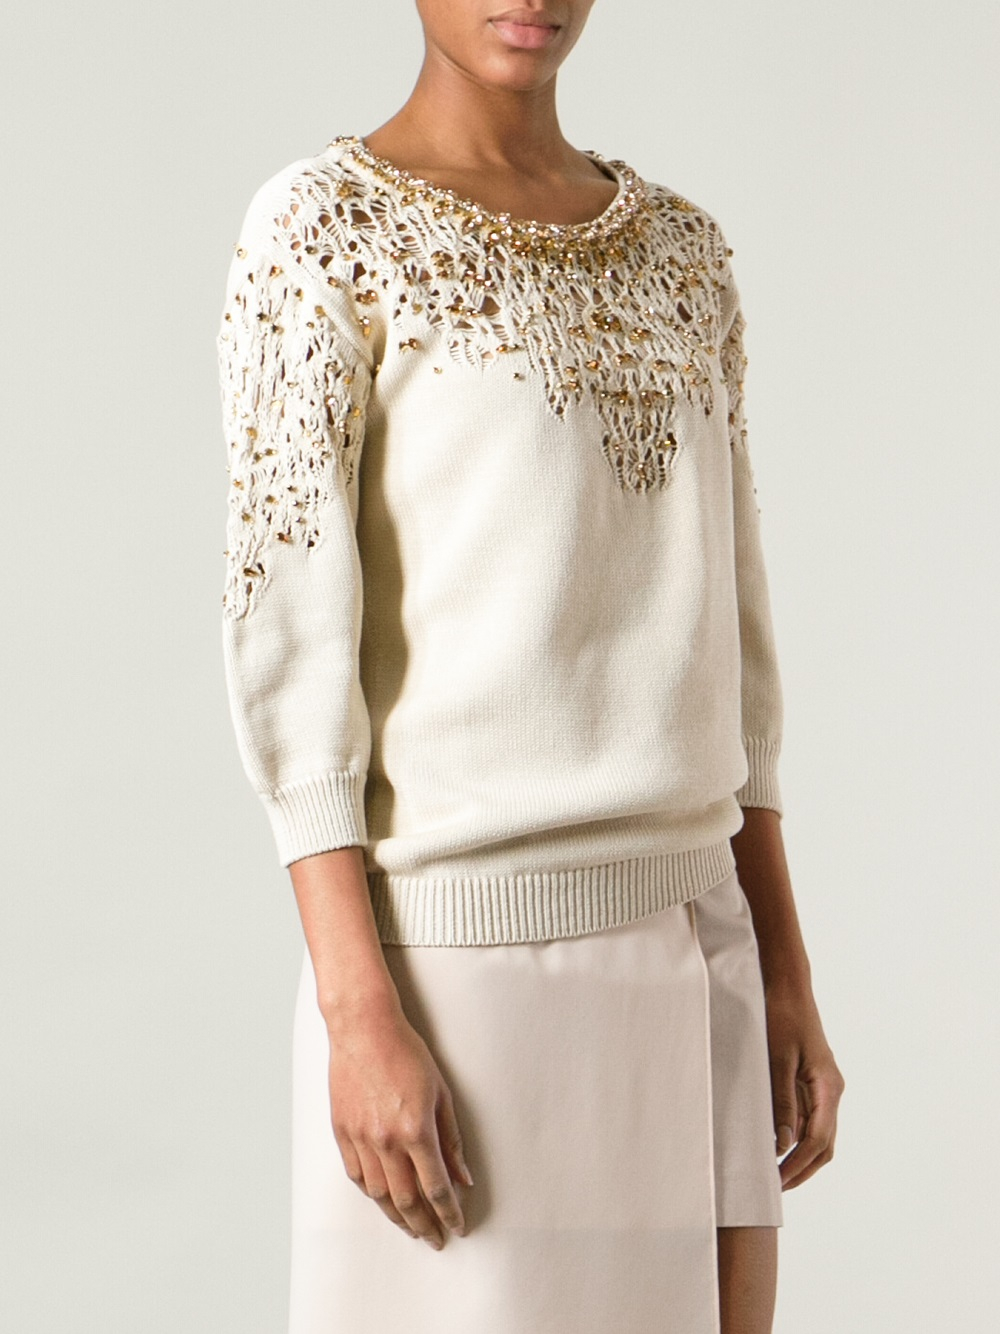 Lyst - Ermanno Scervino Jewel Embellished Knit Sweater in Natural